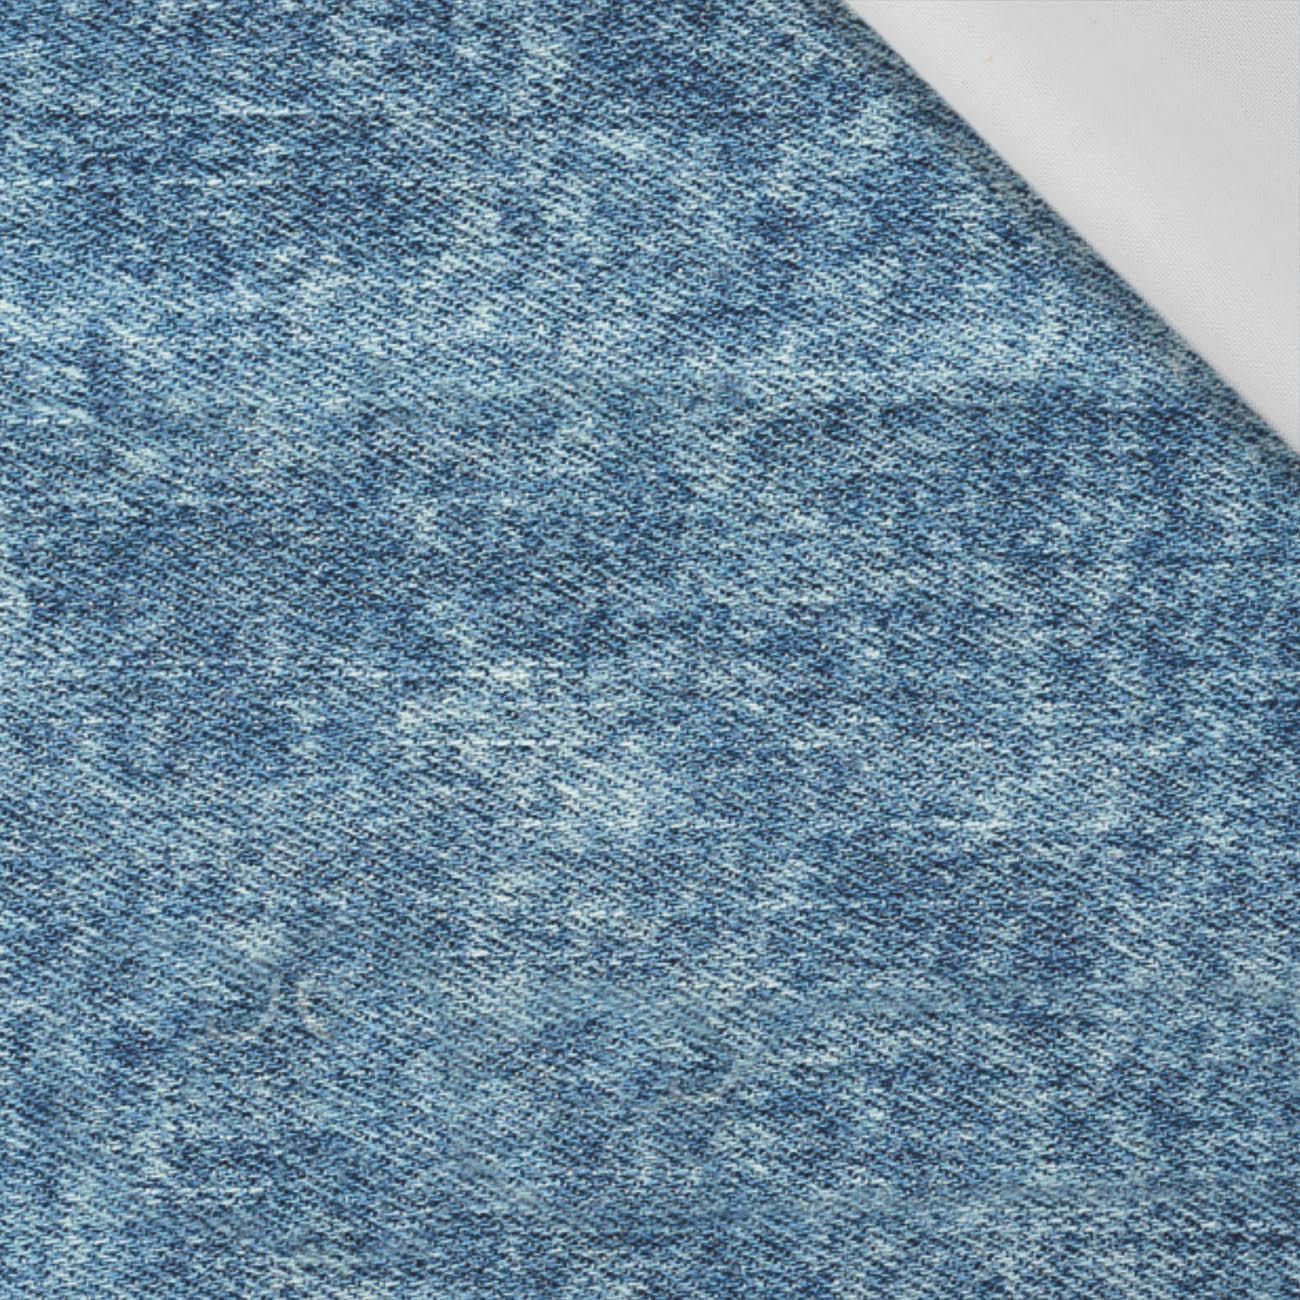 VINTAGE LOOK JEANS (Altantic Blue) - Cotton woven fabric